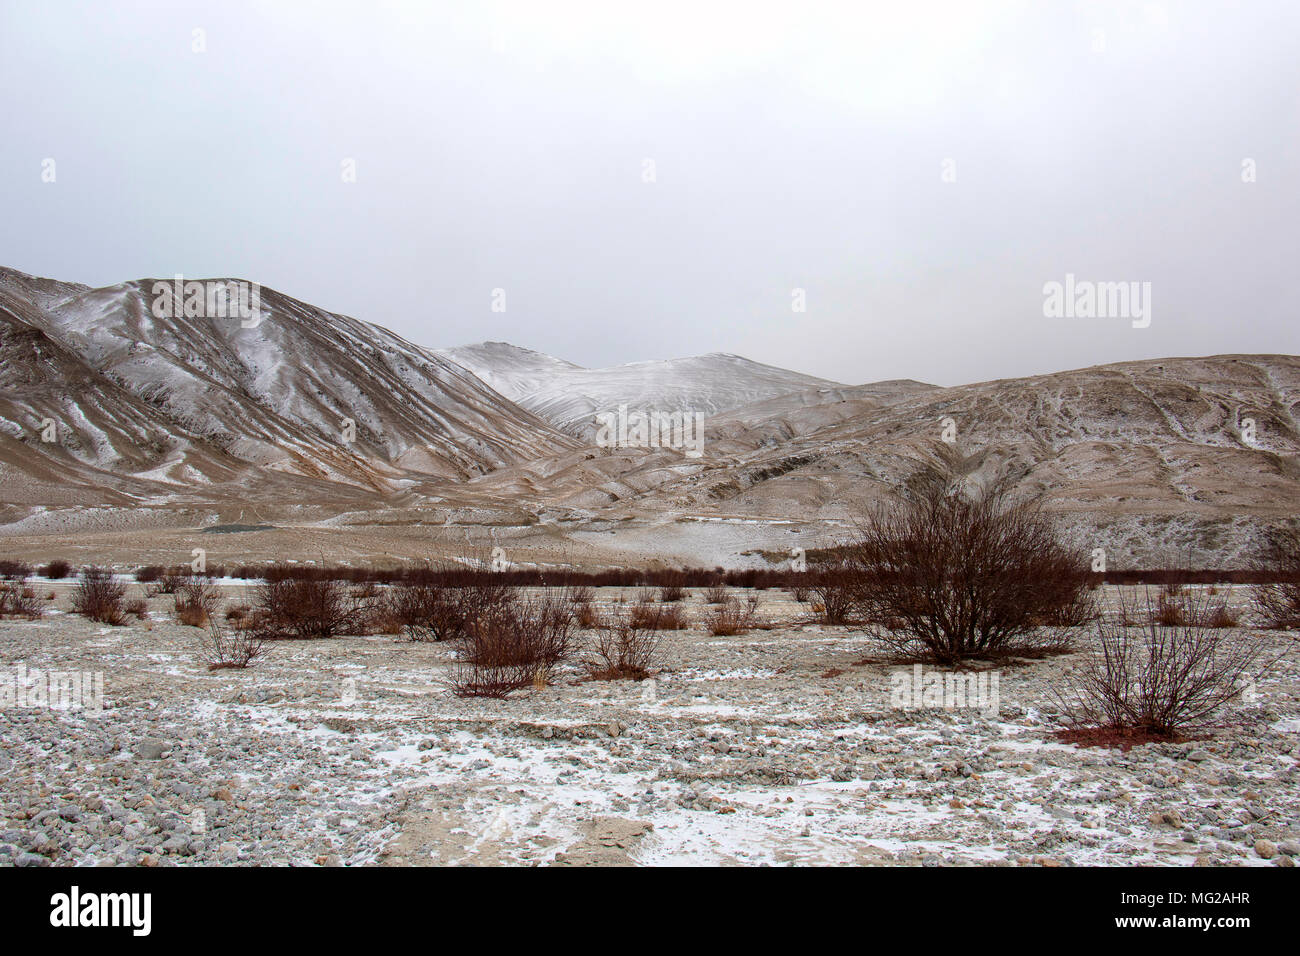 India China Border near Chuchul, Ladakh, Jammu and Kashmir Stock Photo